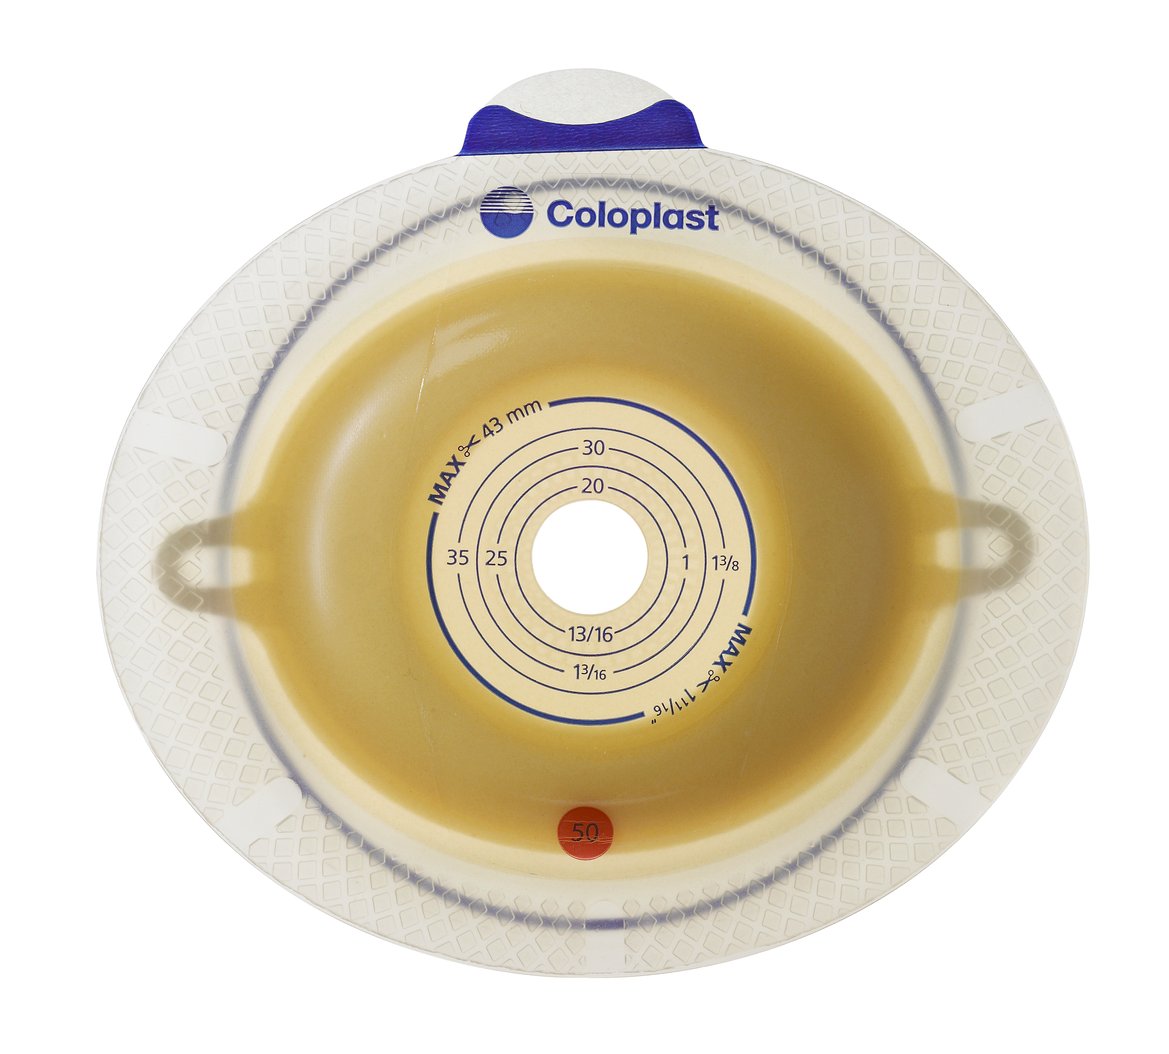 Coloplast Sensura Flex Xpro 2-delt hudplate med Convex Ligth, 11306, Ringstørrelse 50 mm, oppklippbar 15-43 mm, 10 stk.